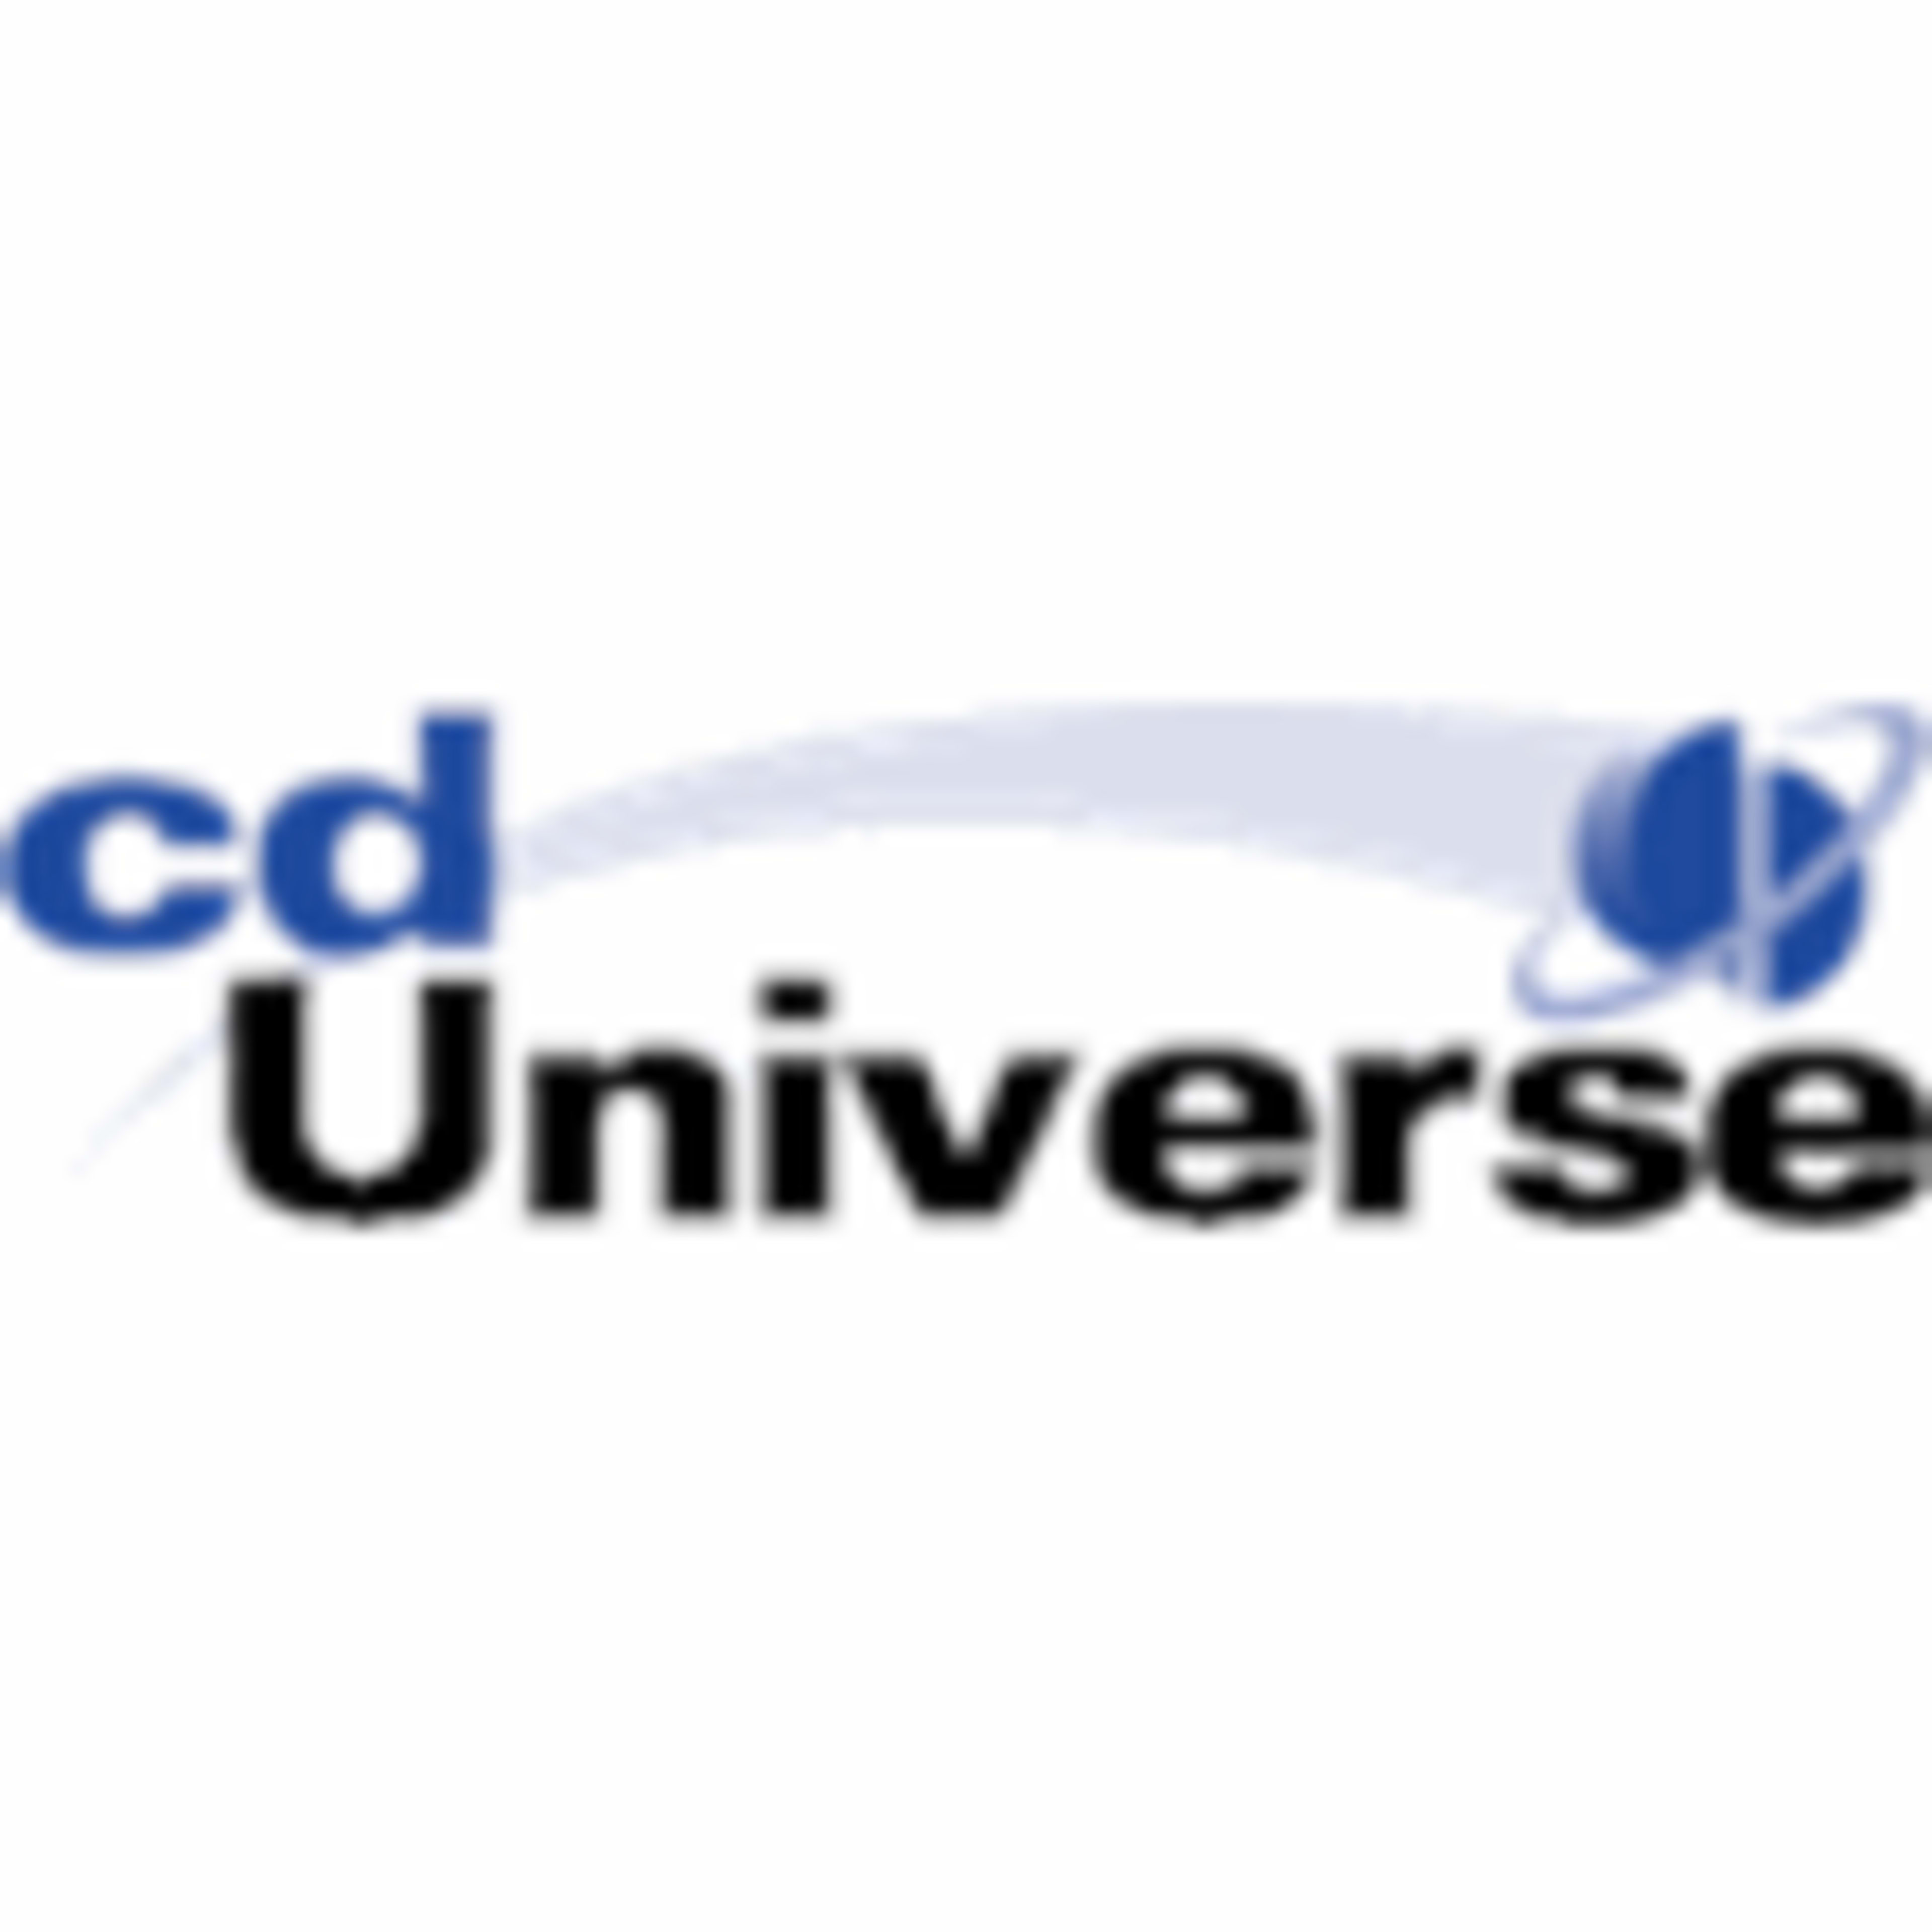 CD UniverseCode